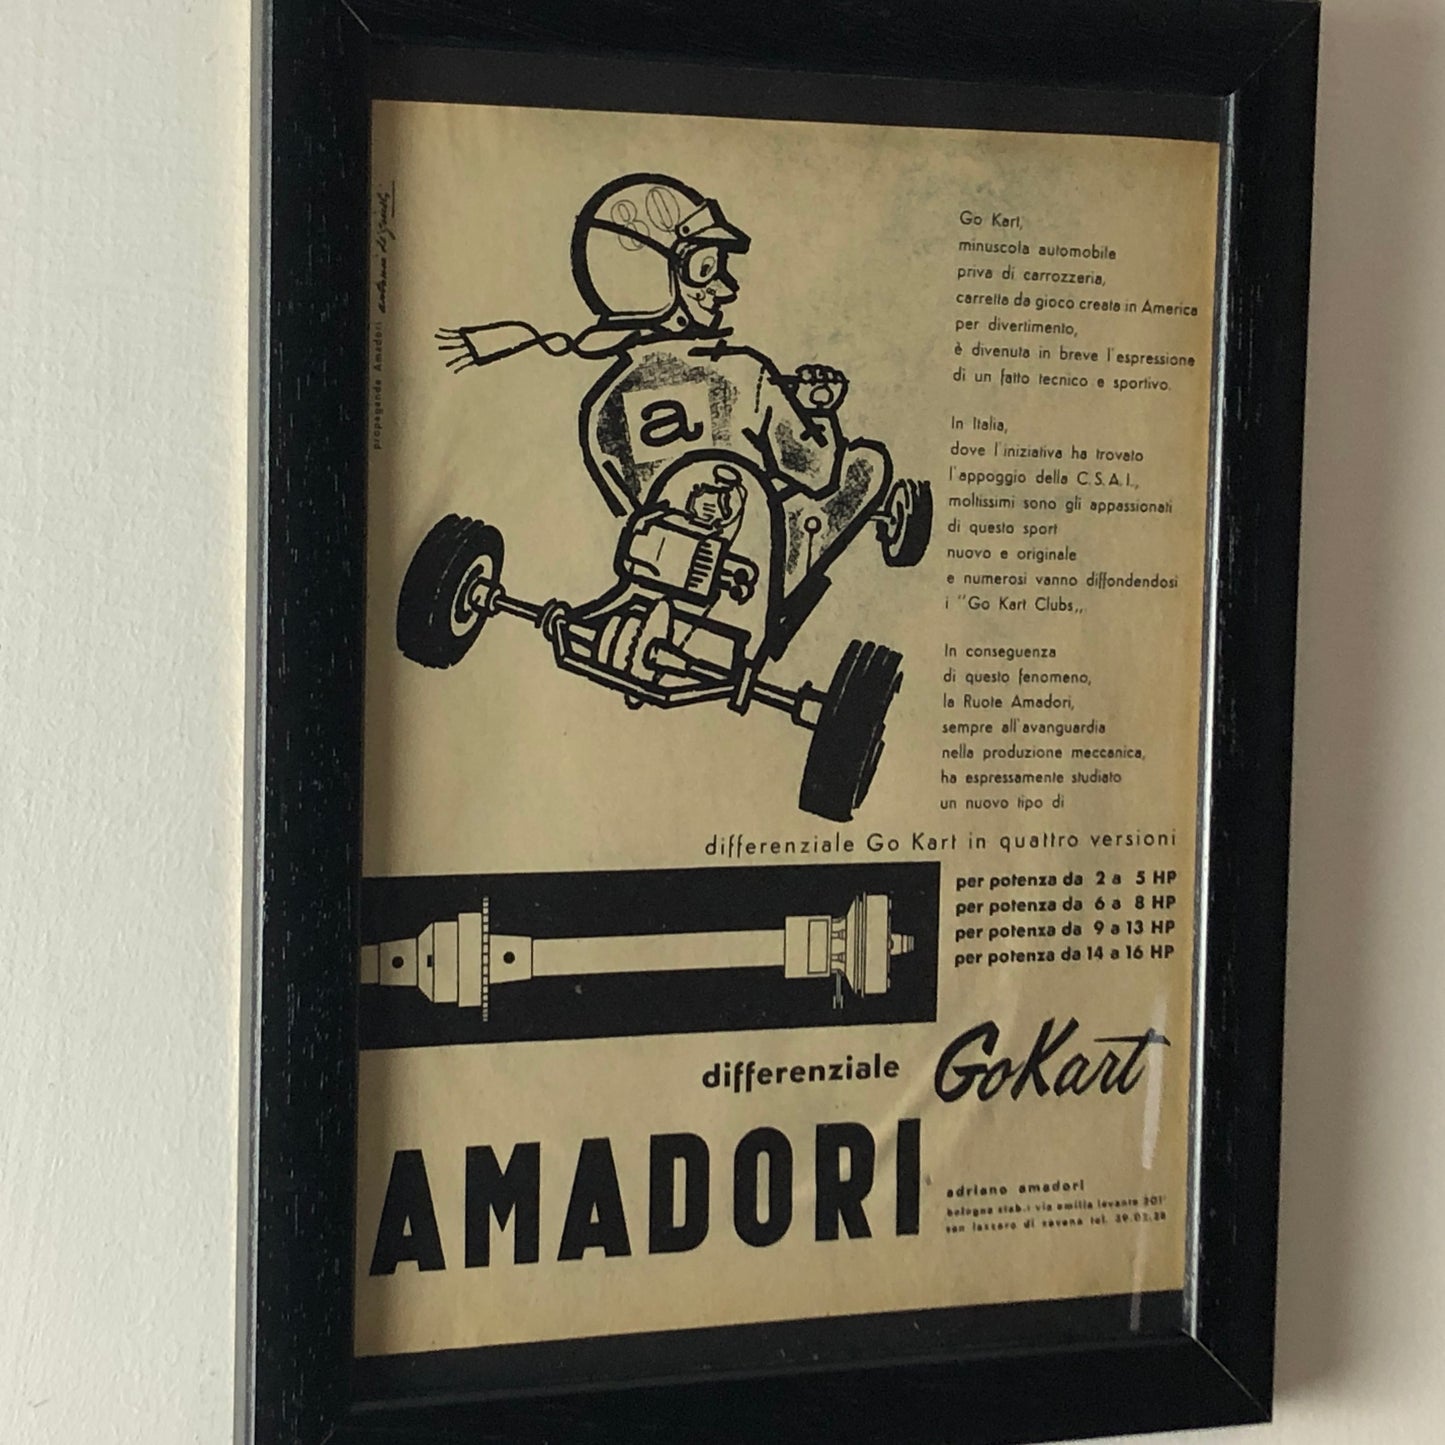 Amadori, 1960 Differential for Go Kart Amadori Advertising Designed by Antonio de Giusti